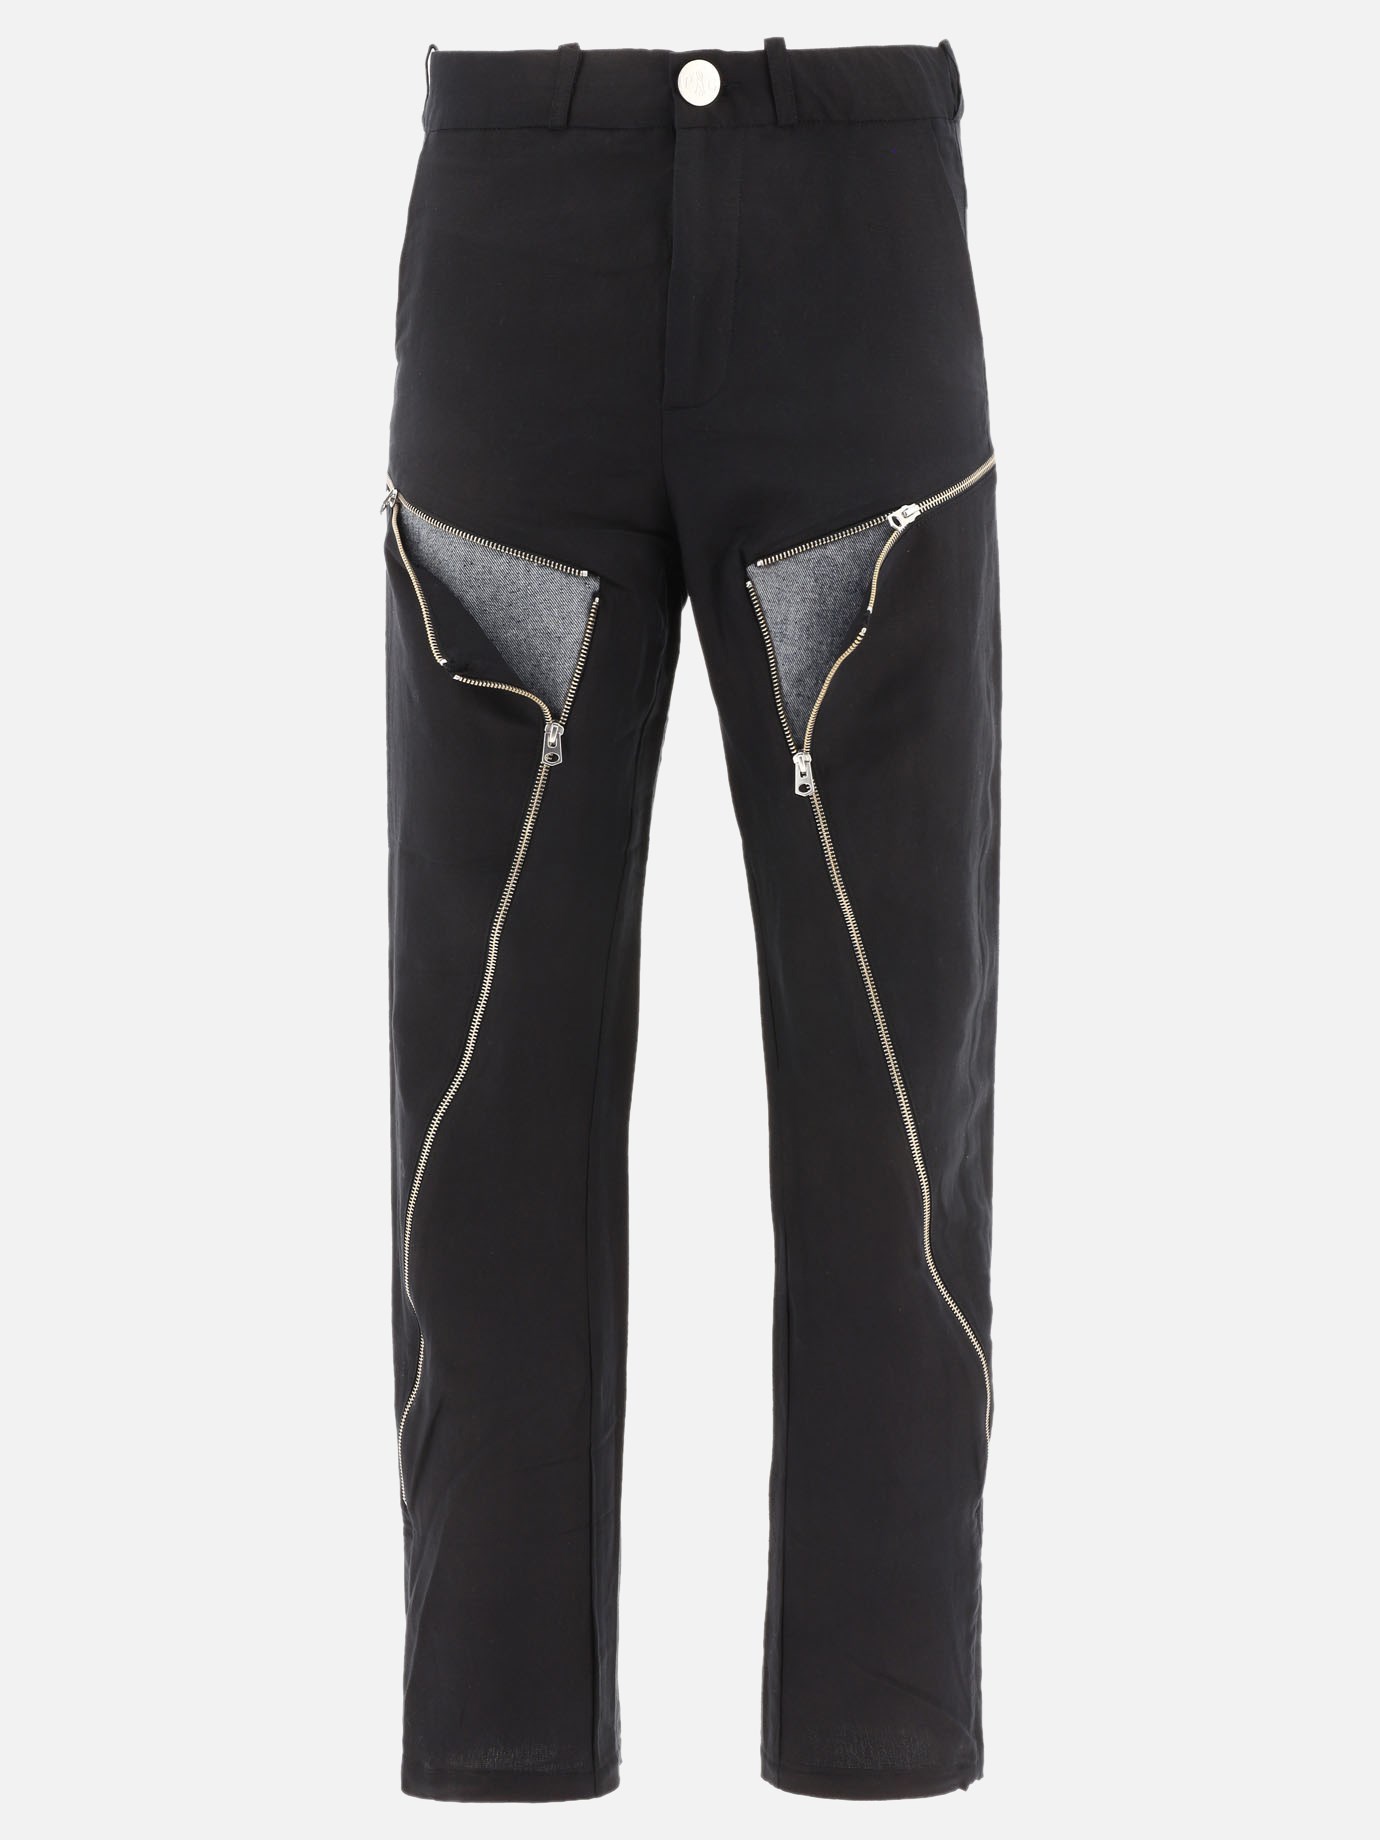 Pantaloni con zipby Per Götesson - 3